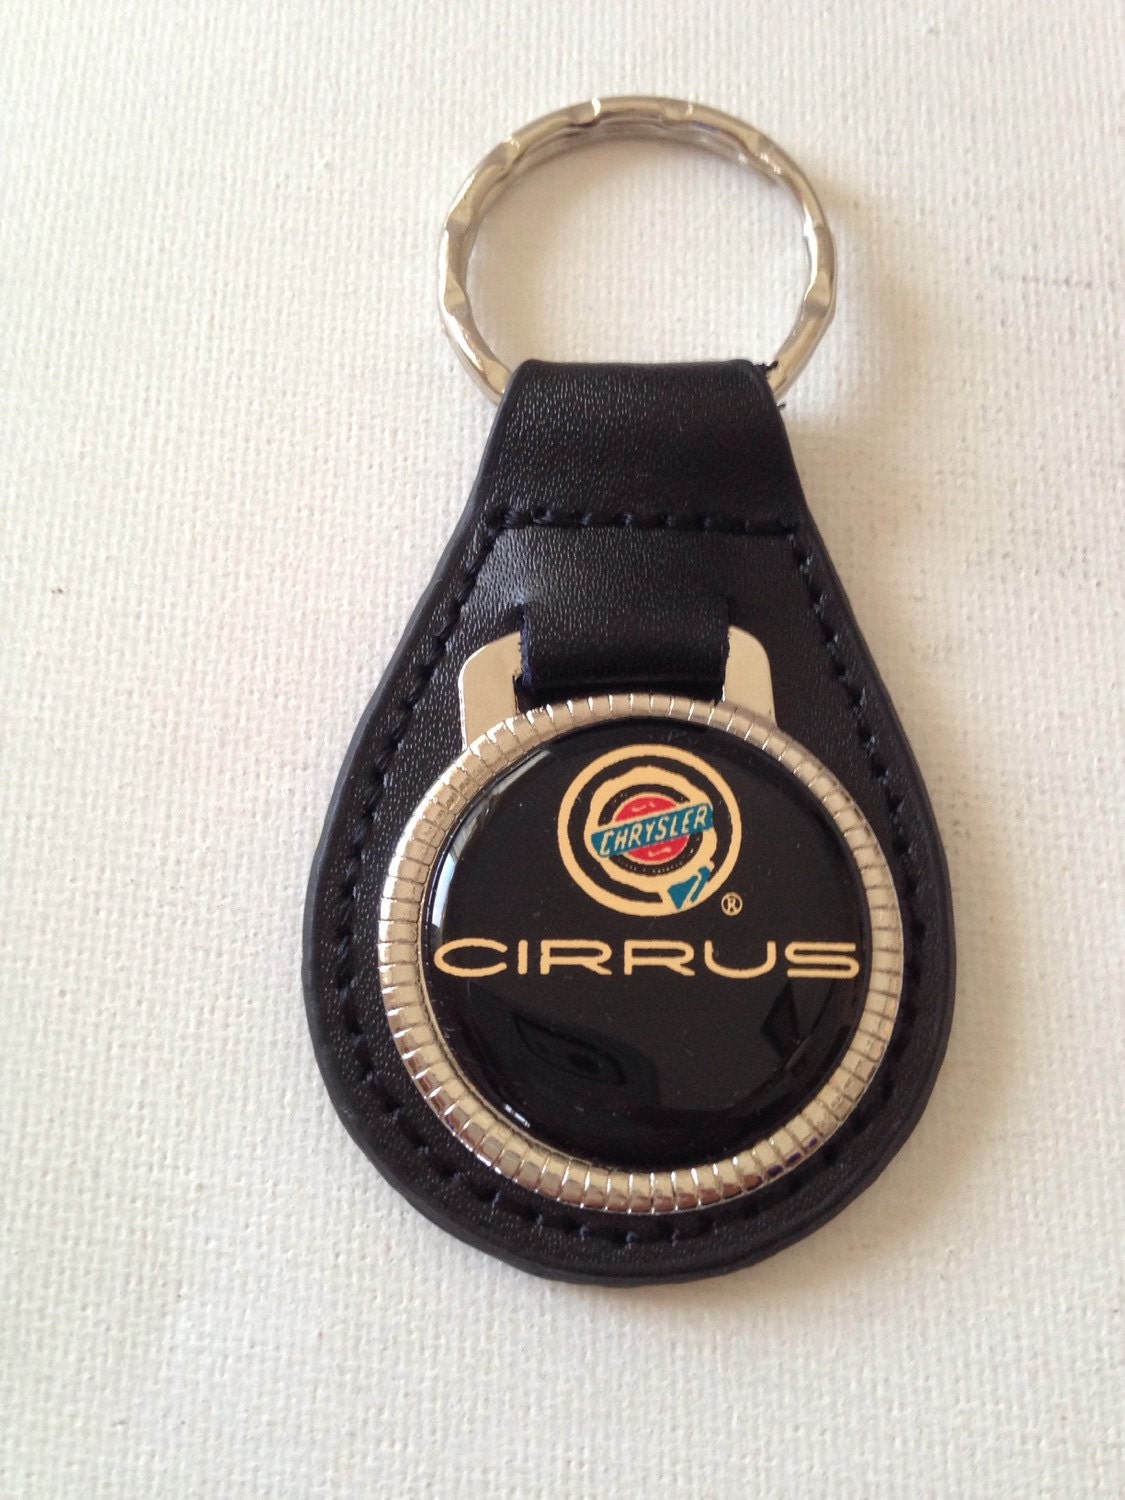 Chrysler Cirrus Keychain Genuine Leather Key Chain